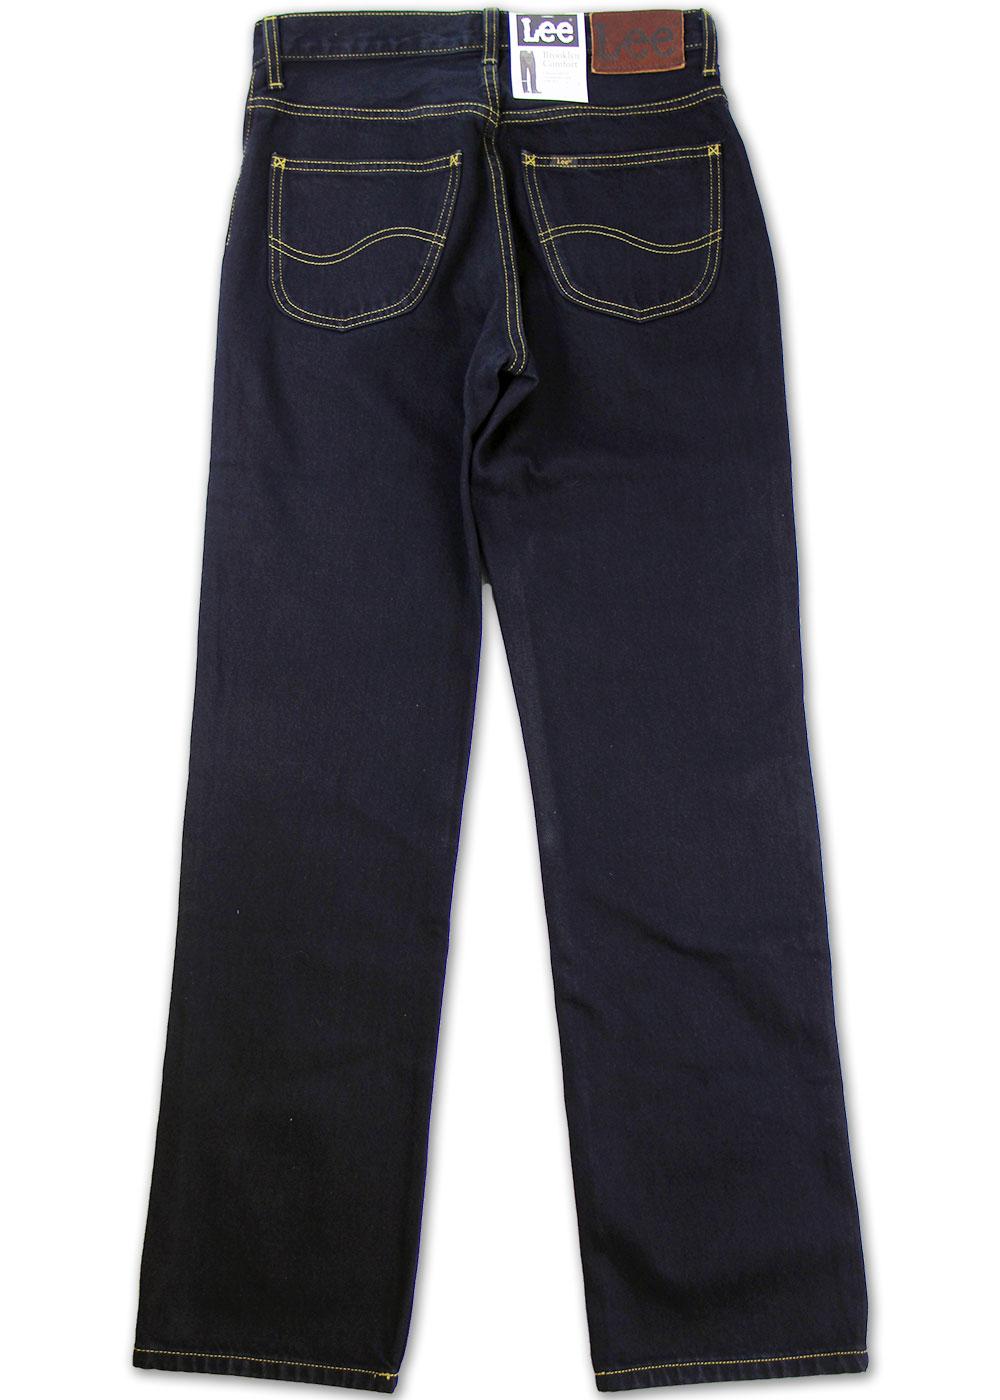 LEE Brooklyn Retro Mod Comfort Fit Western Jeans Blue Black